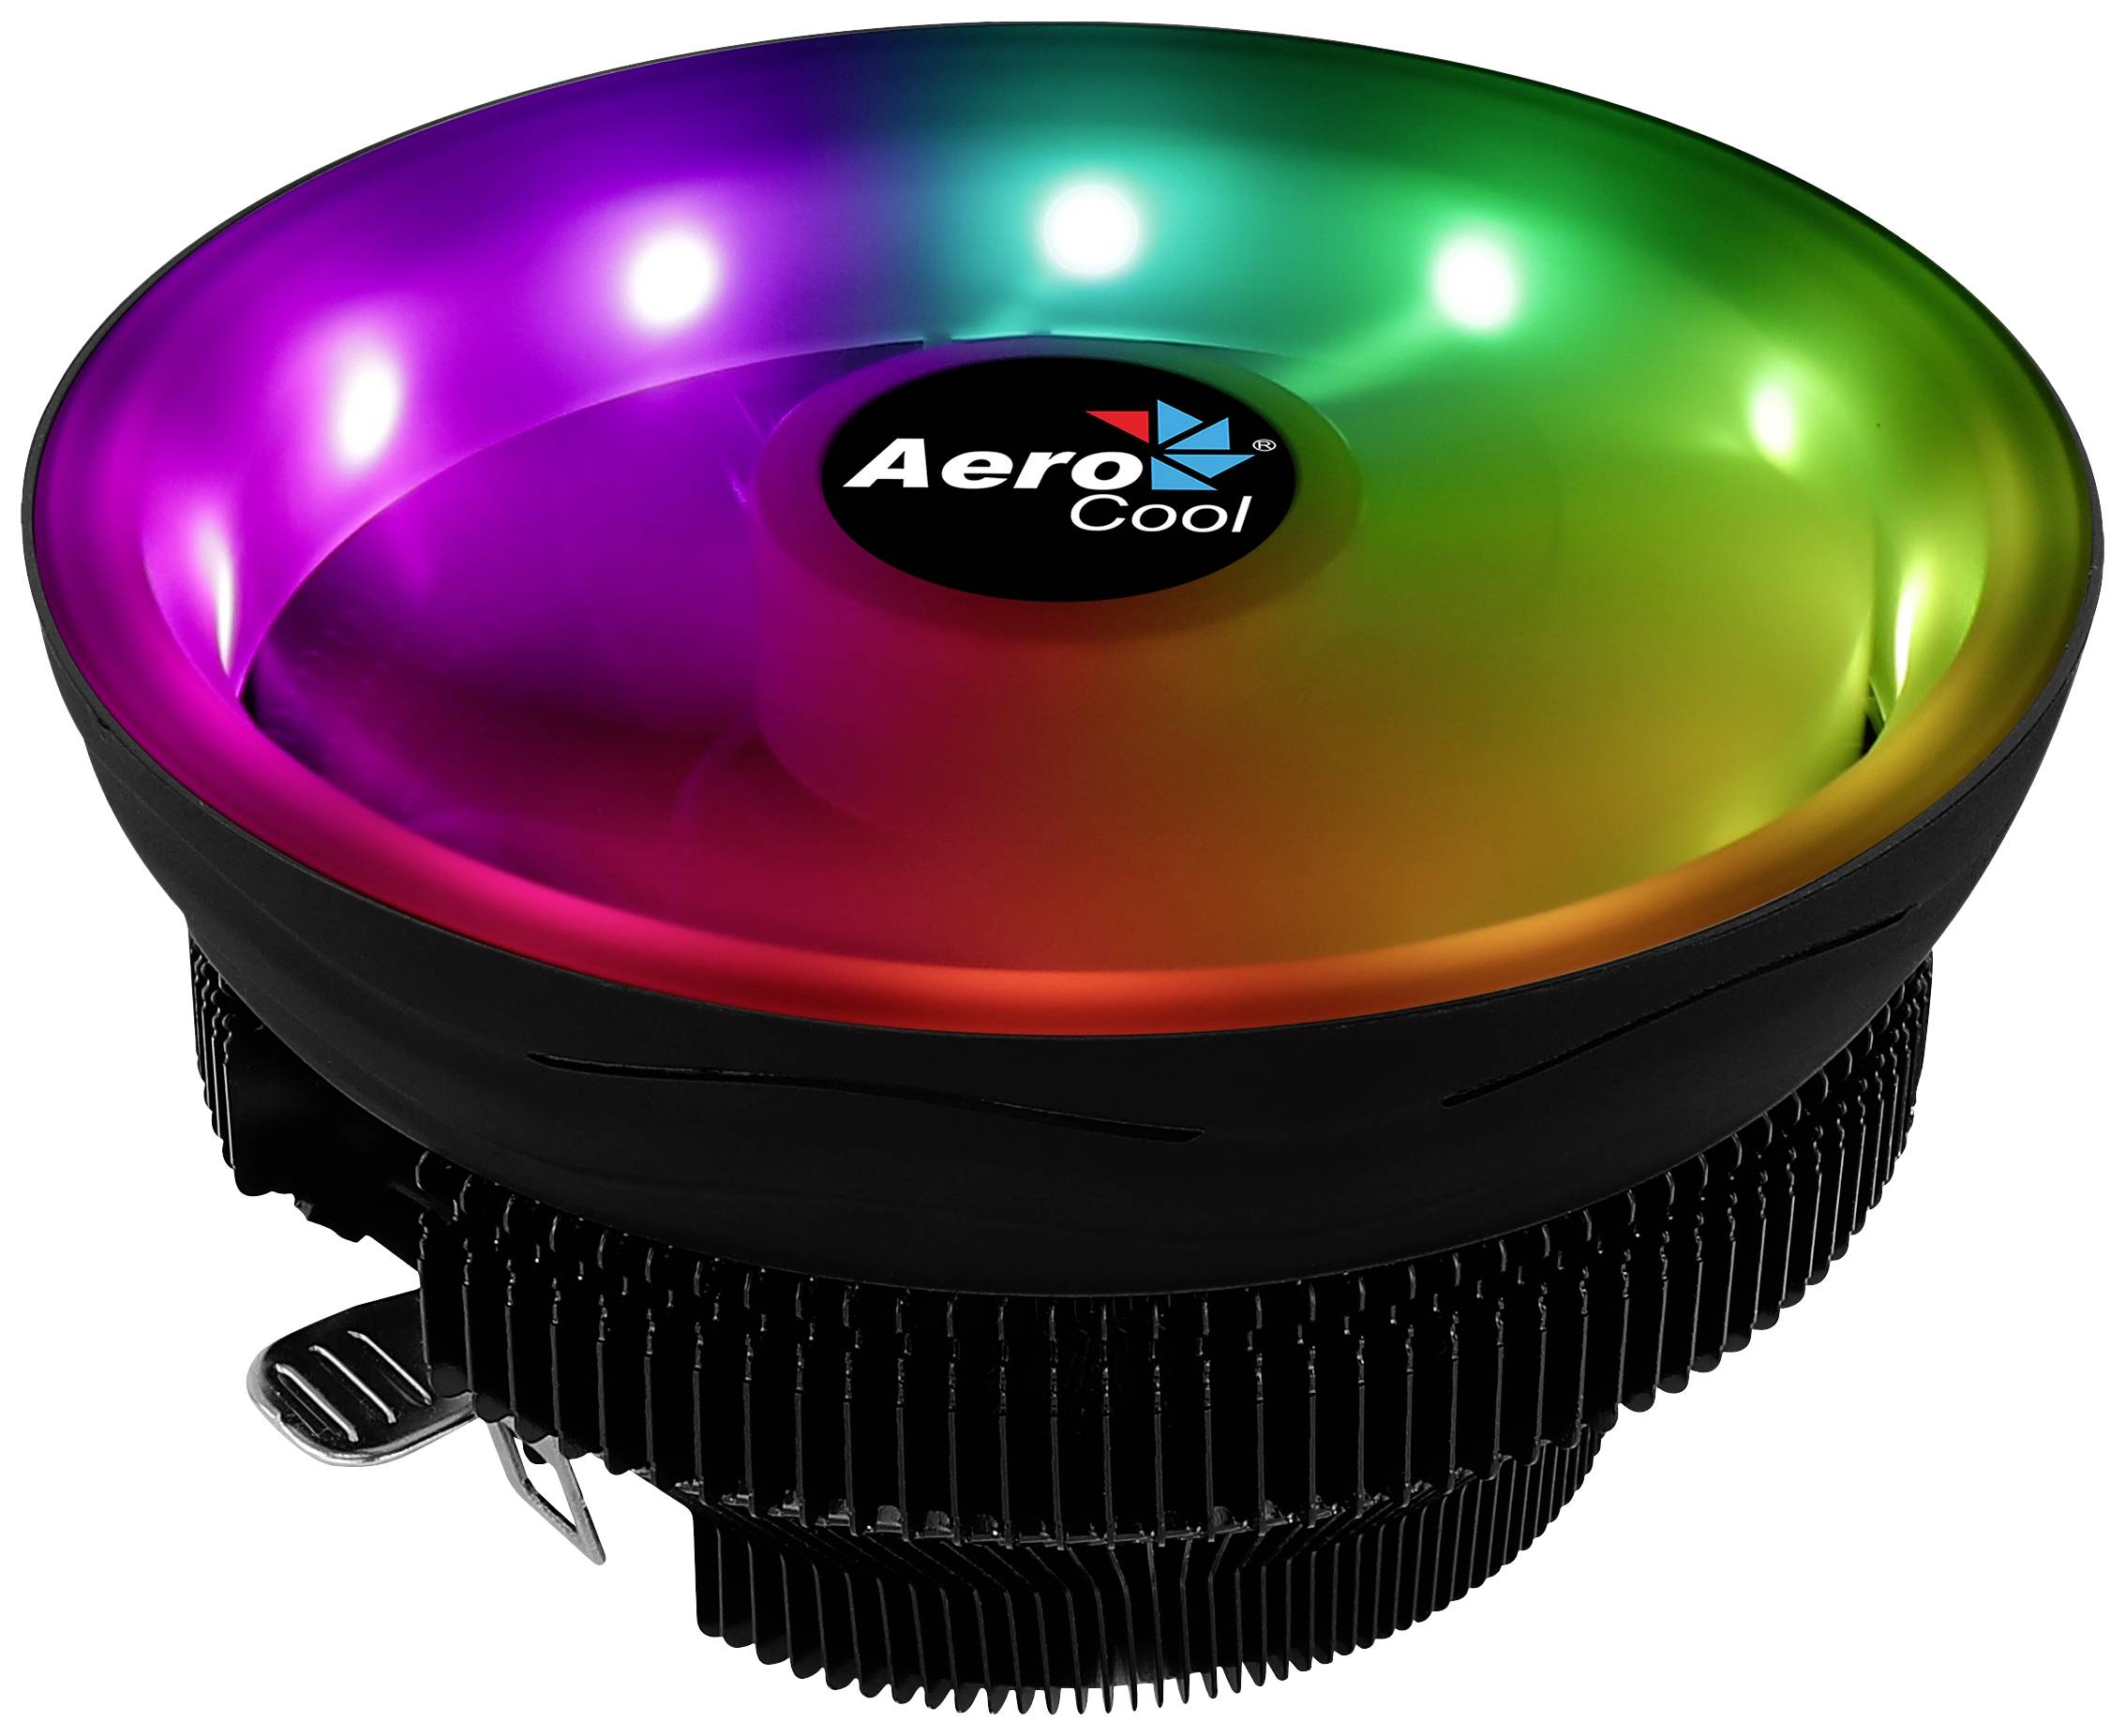 AEROCOOL Core Plus New Item